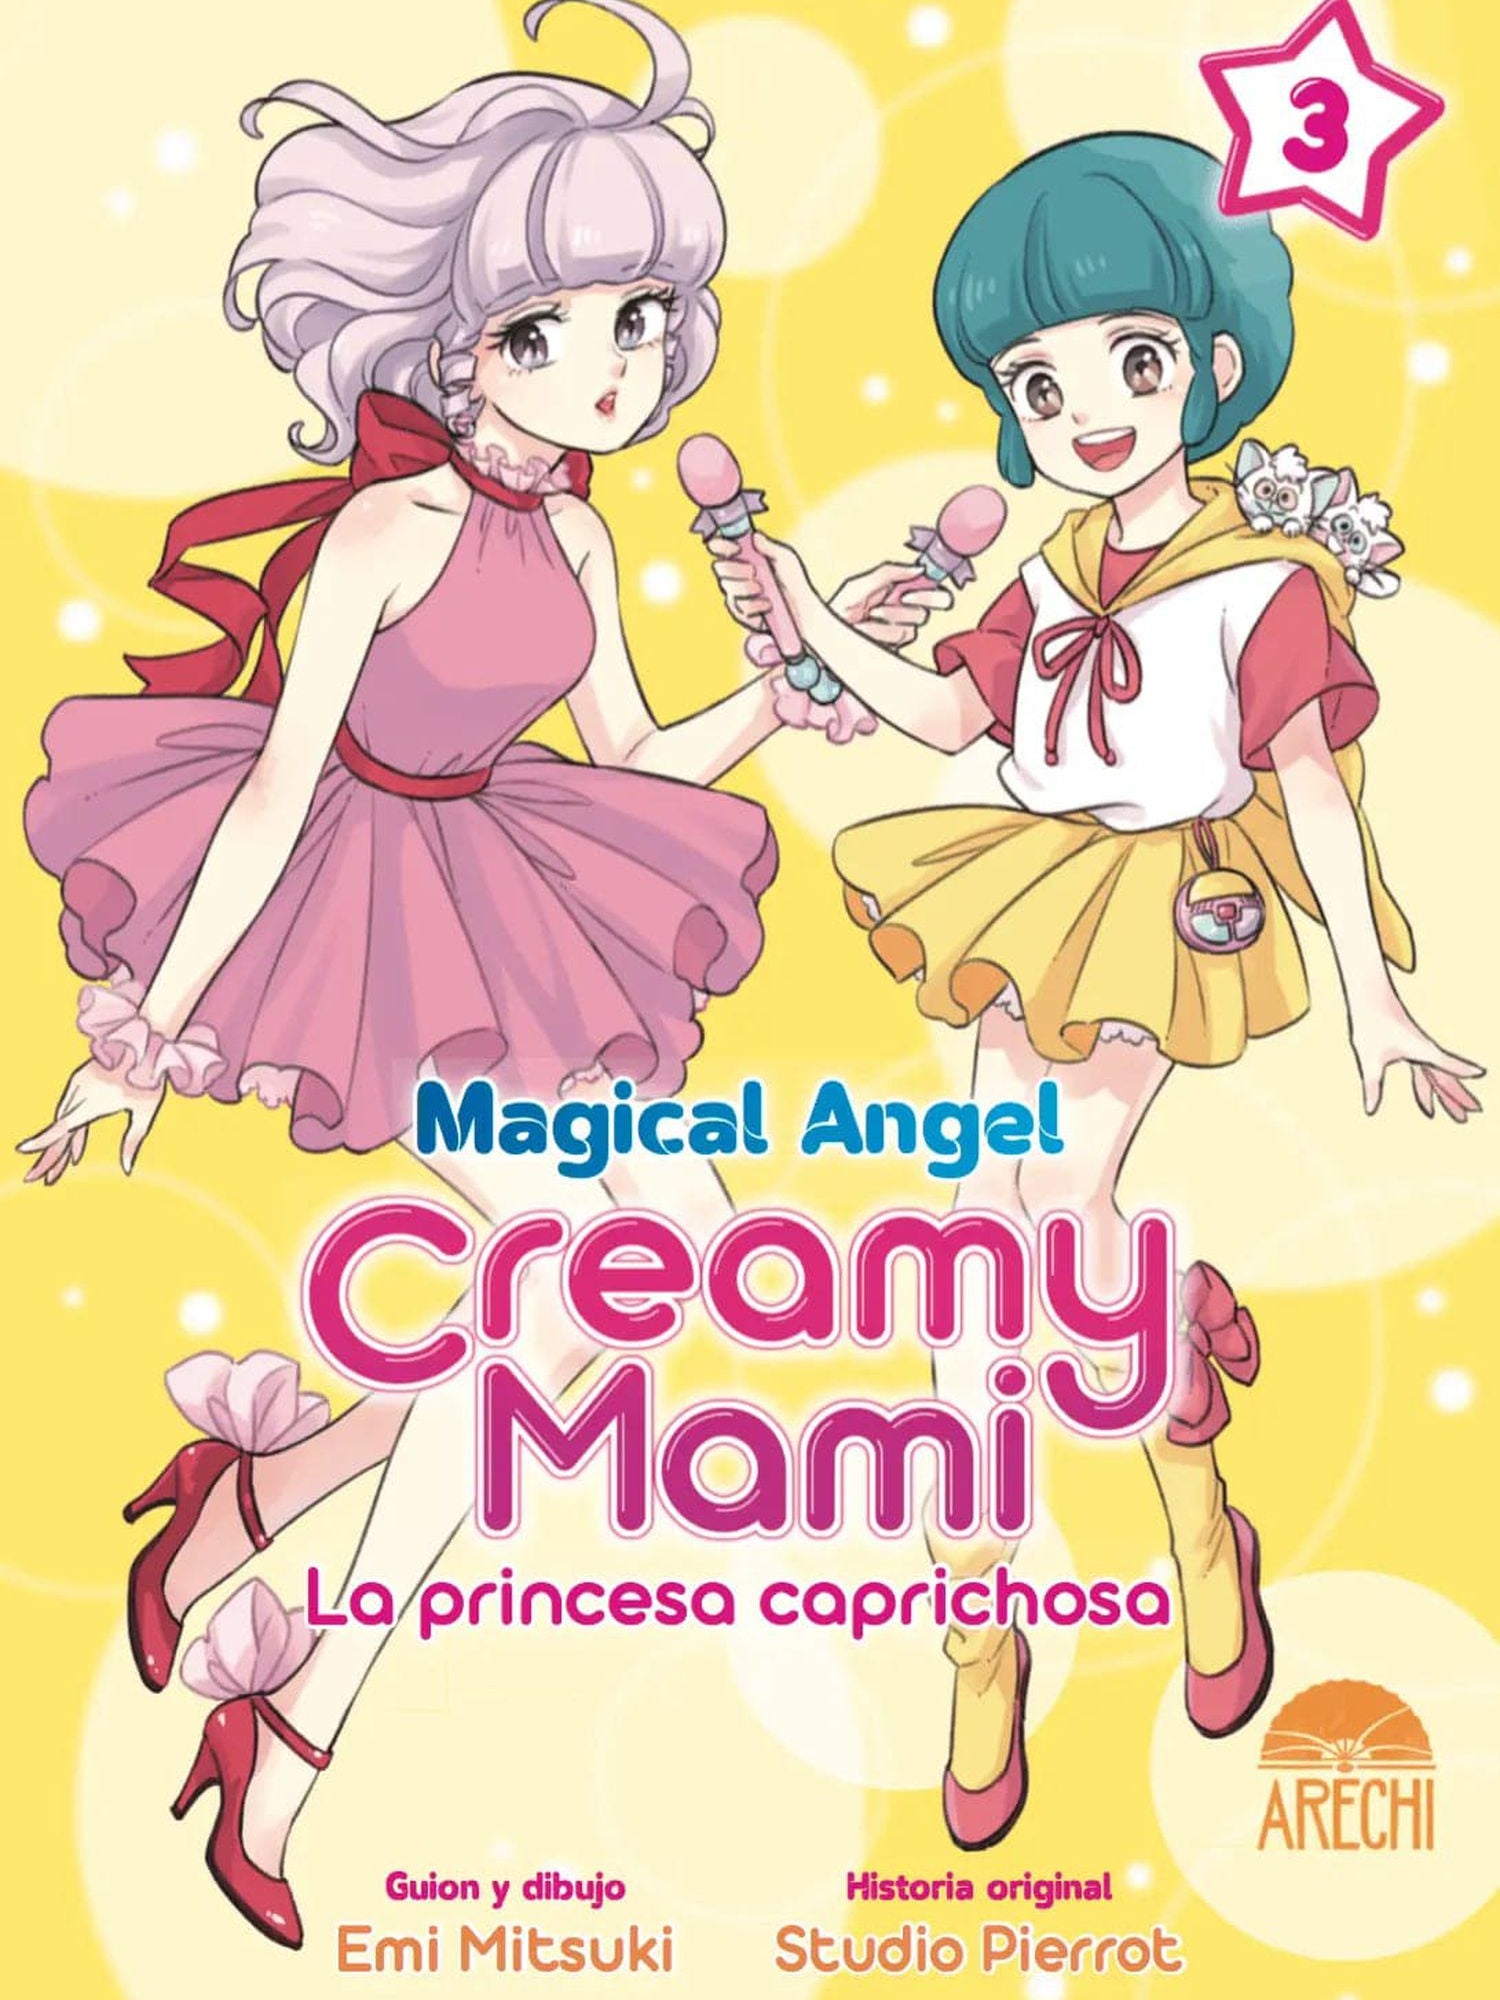 Magical Angel Creamy Mami: La Princesa Caprichosa 3 Arechi ENcuadrocomics